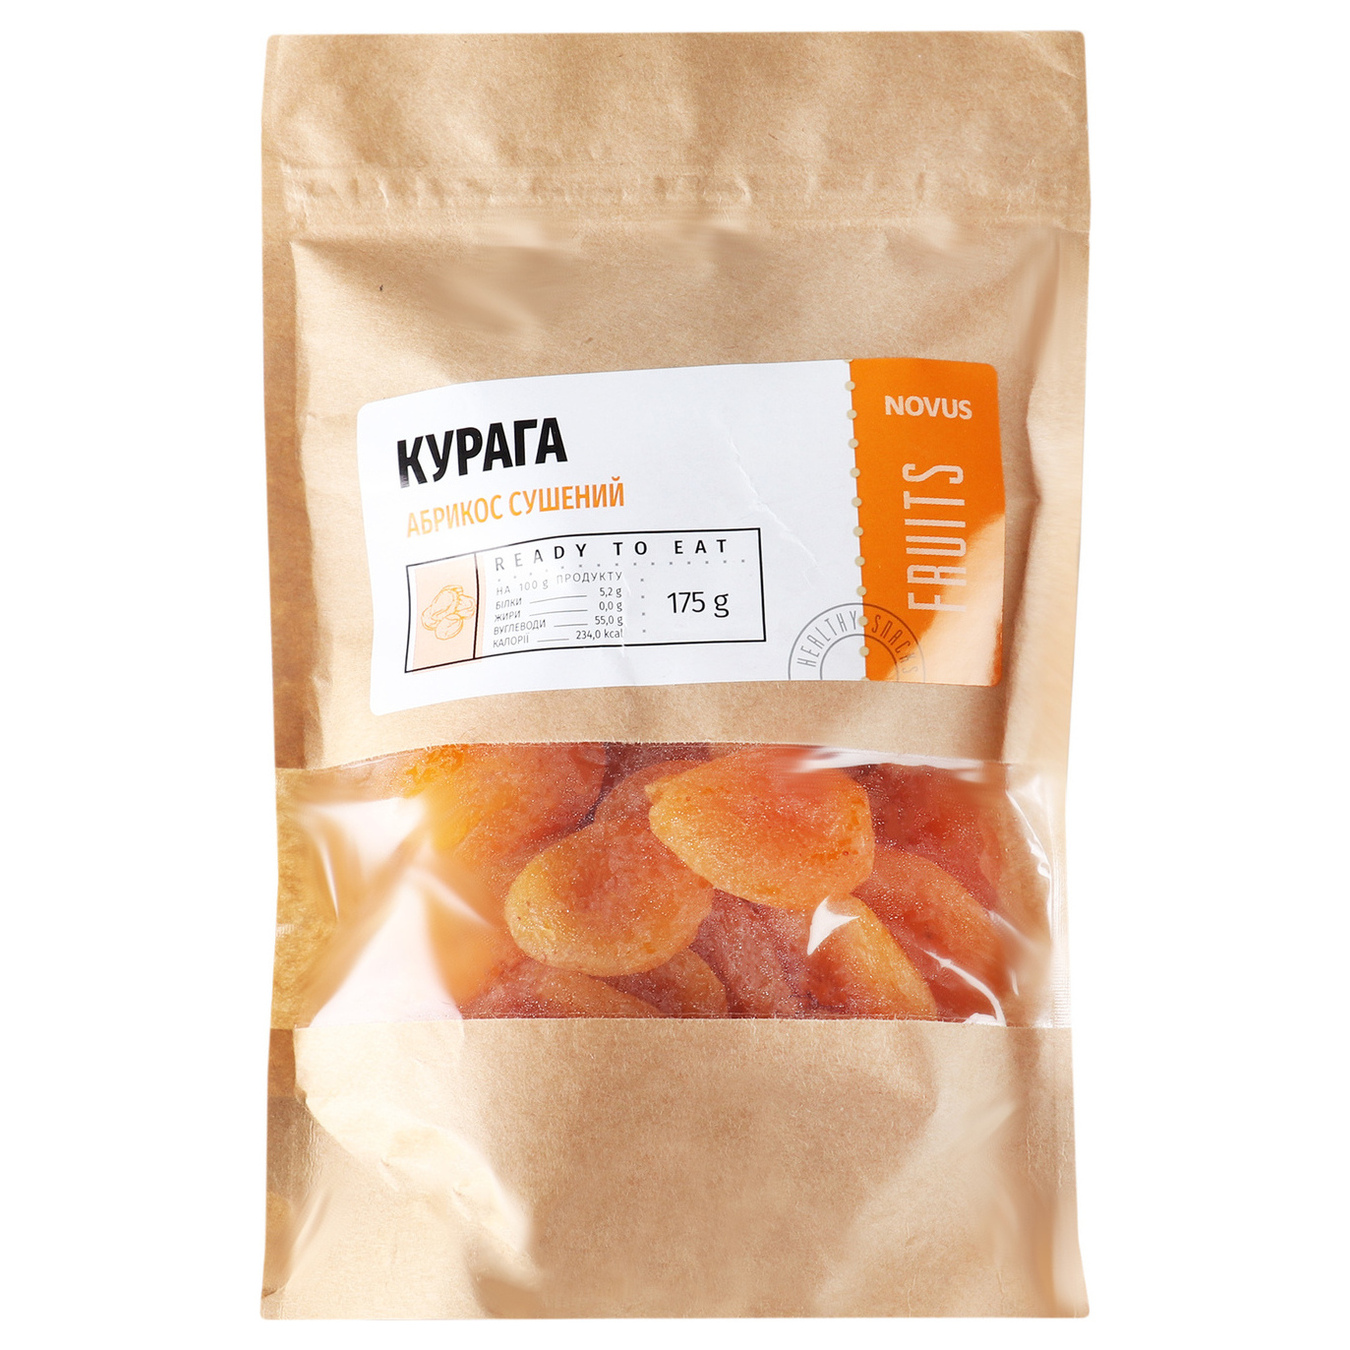 Novus Dried Apricots 175g